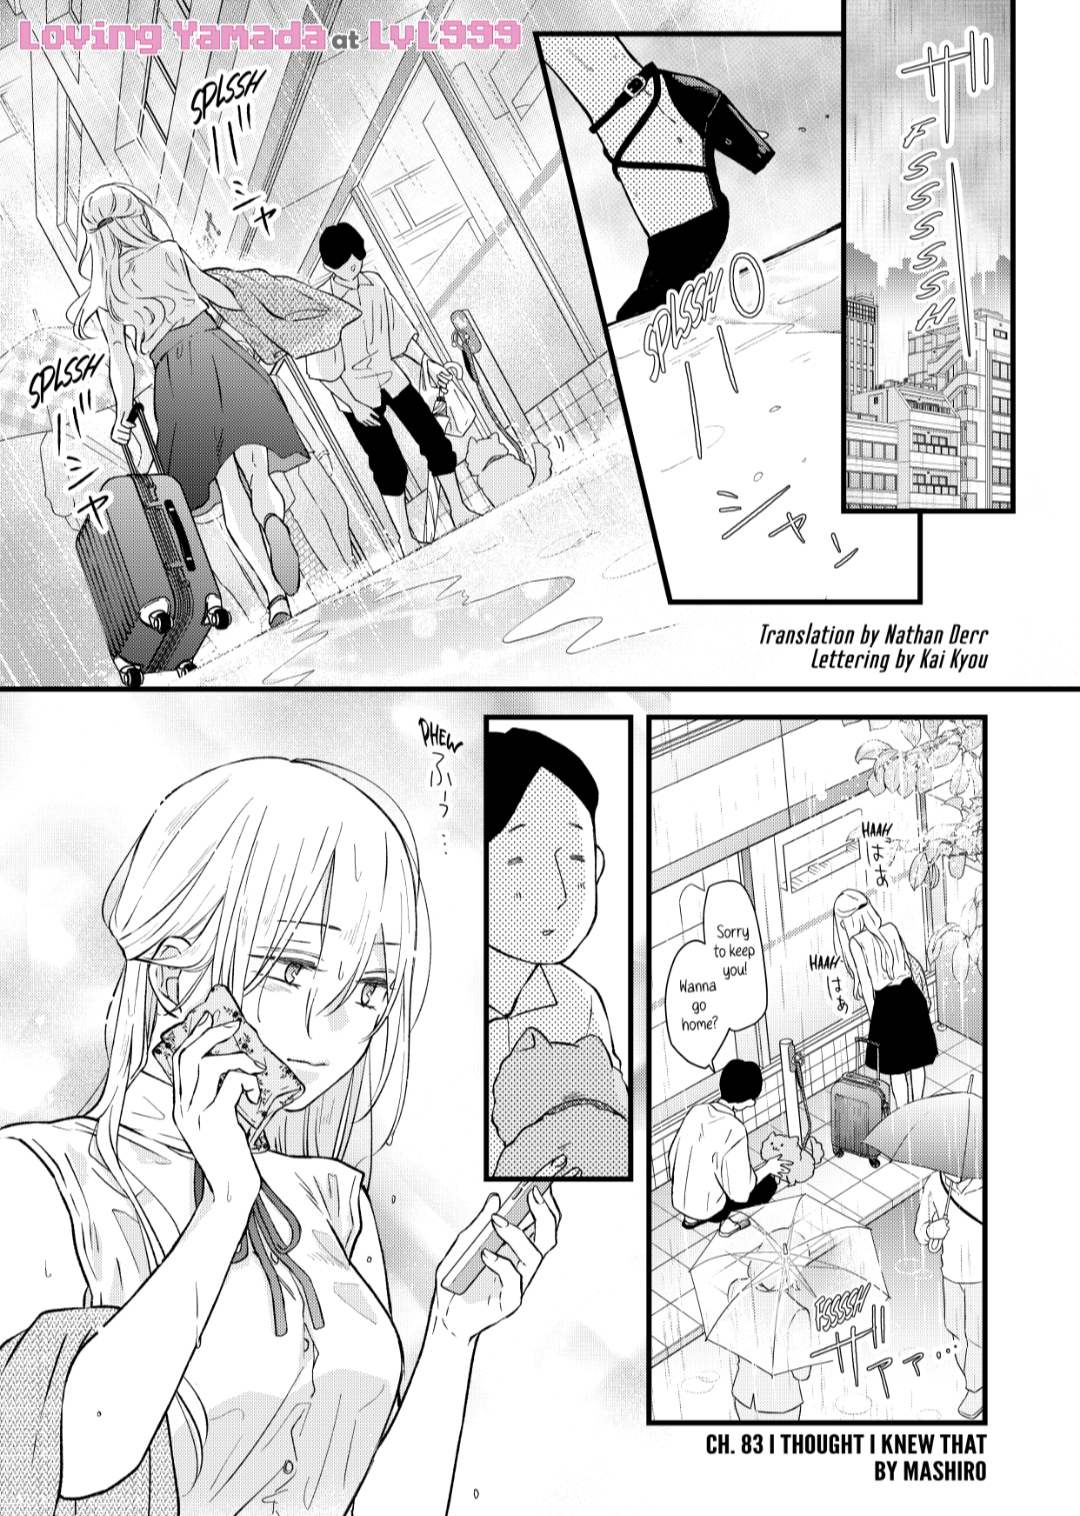 My Love Story with Yamada-kun at Lv999 Manga Getting Print Release